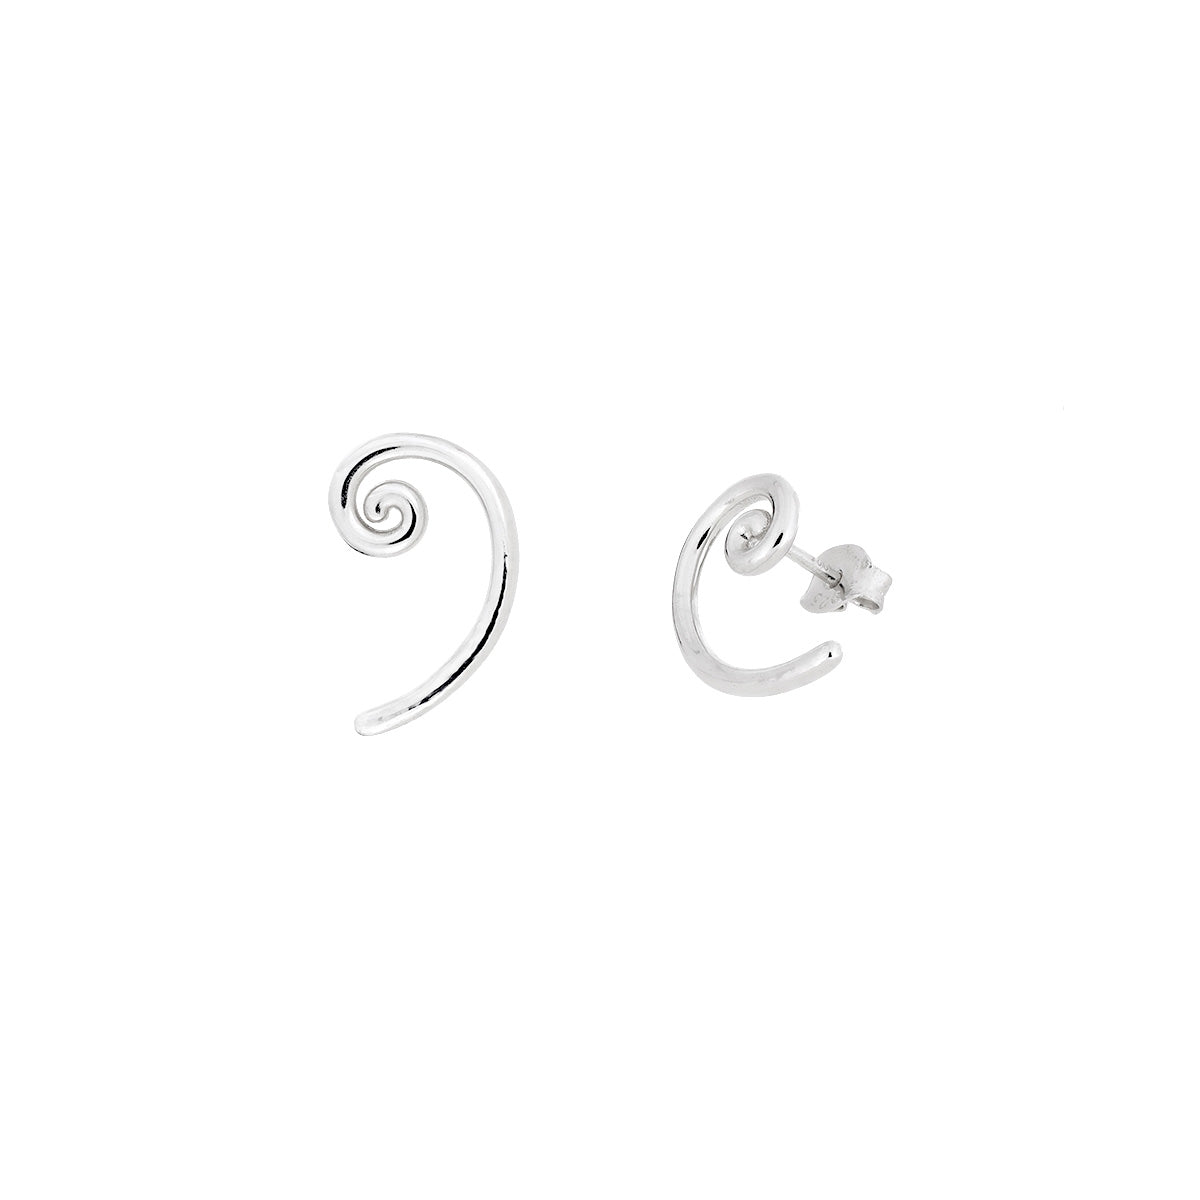 Spiral Stud Earrings in Sterling Silver